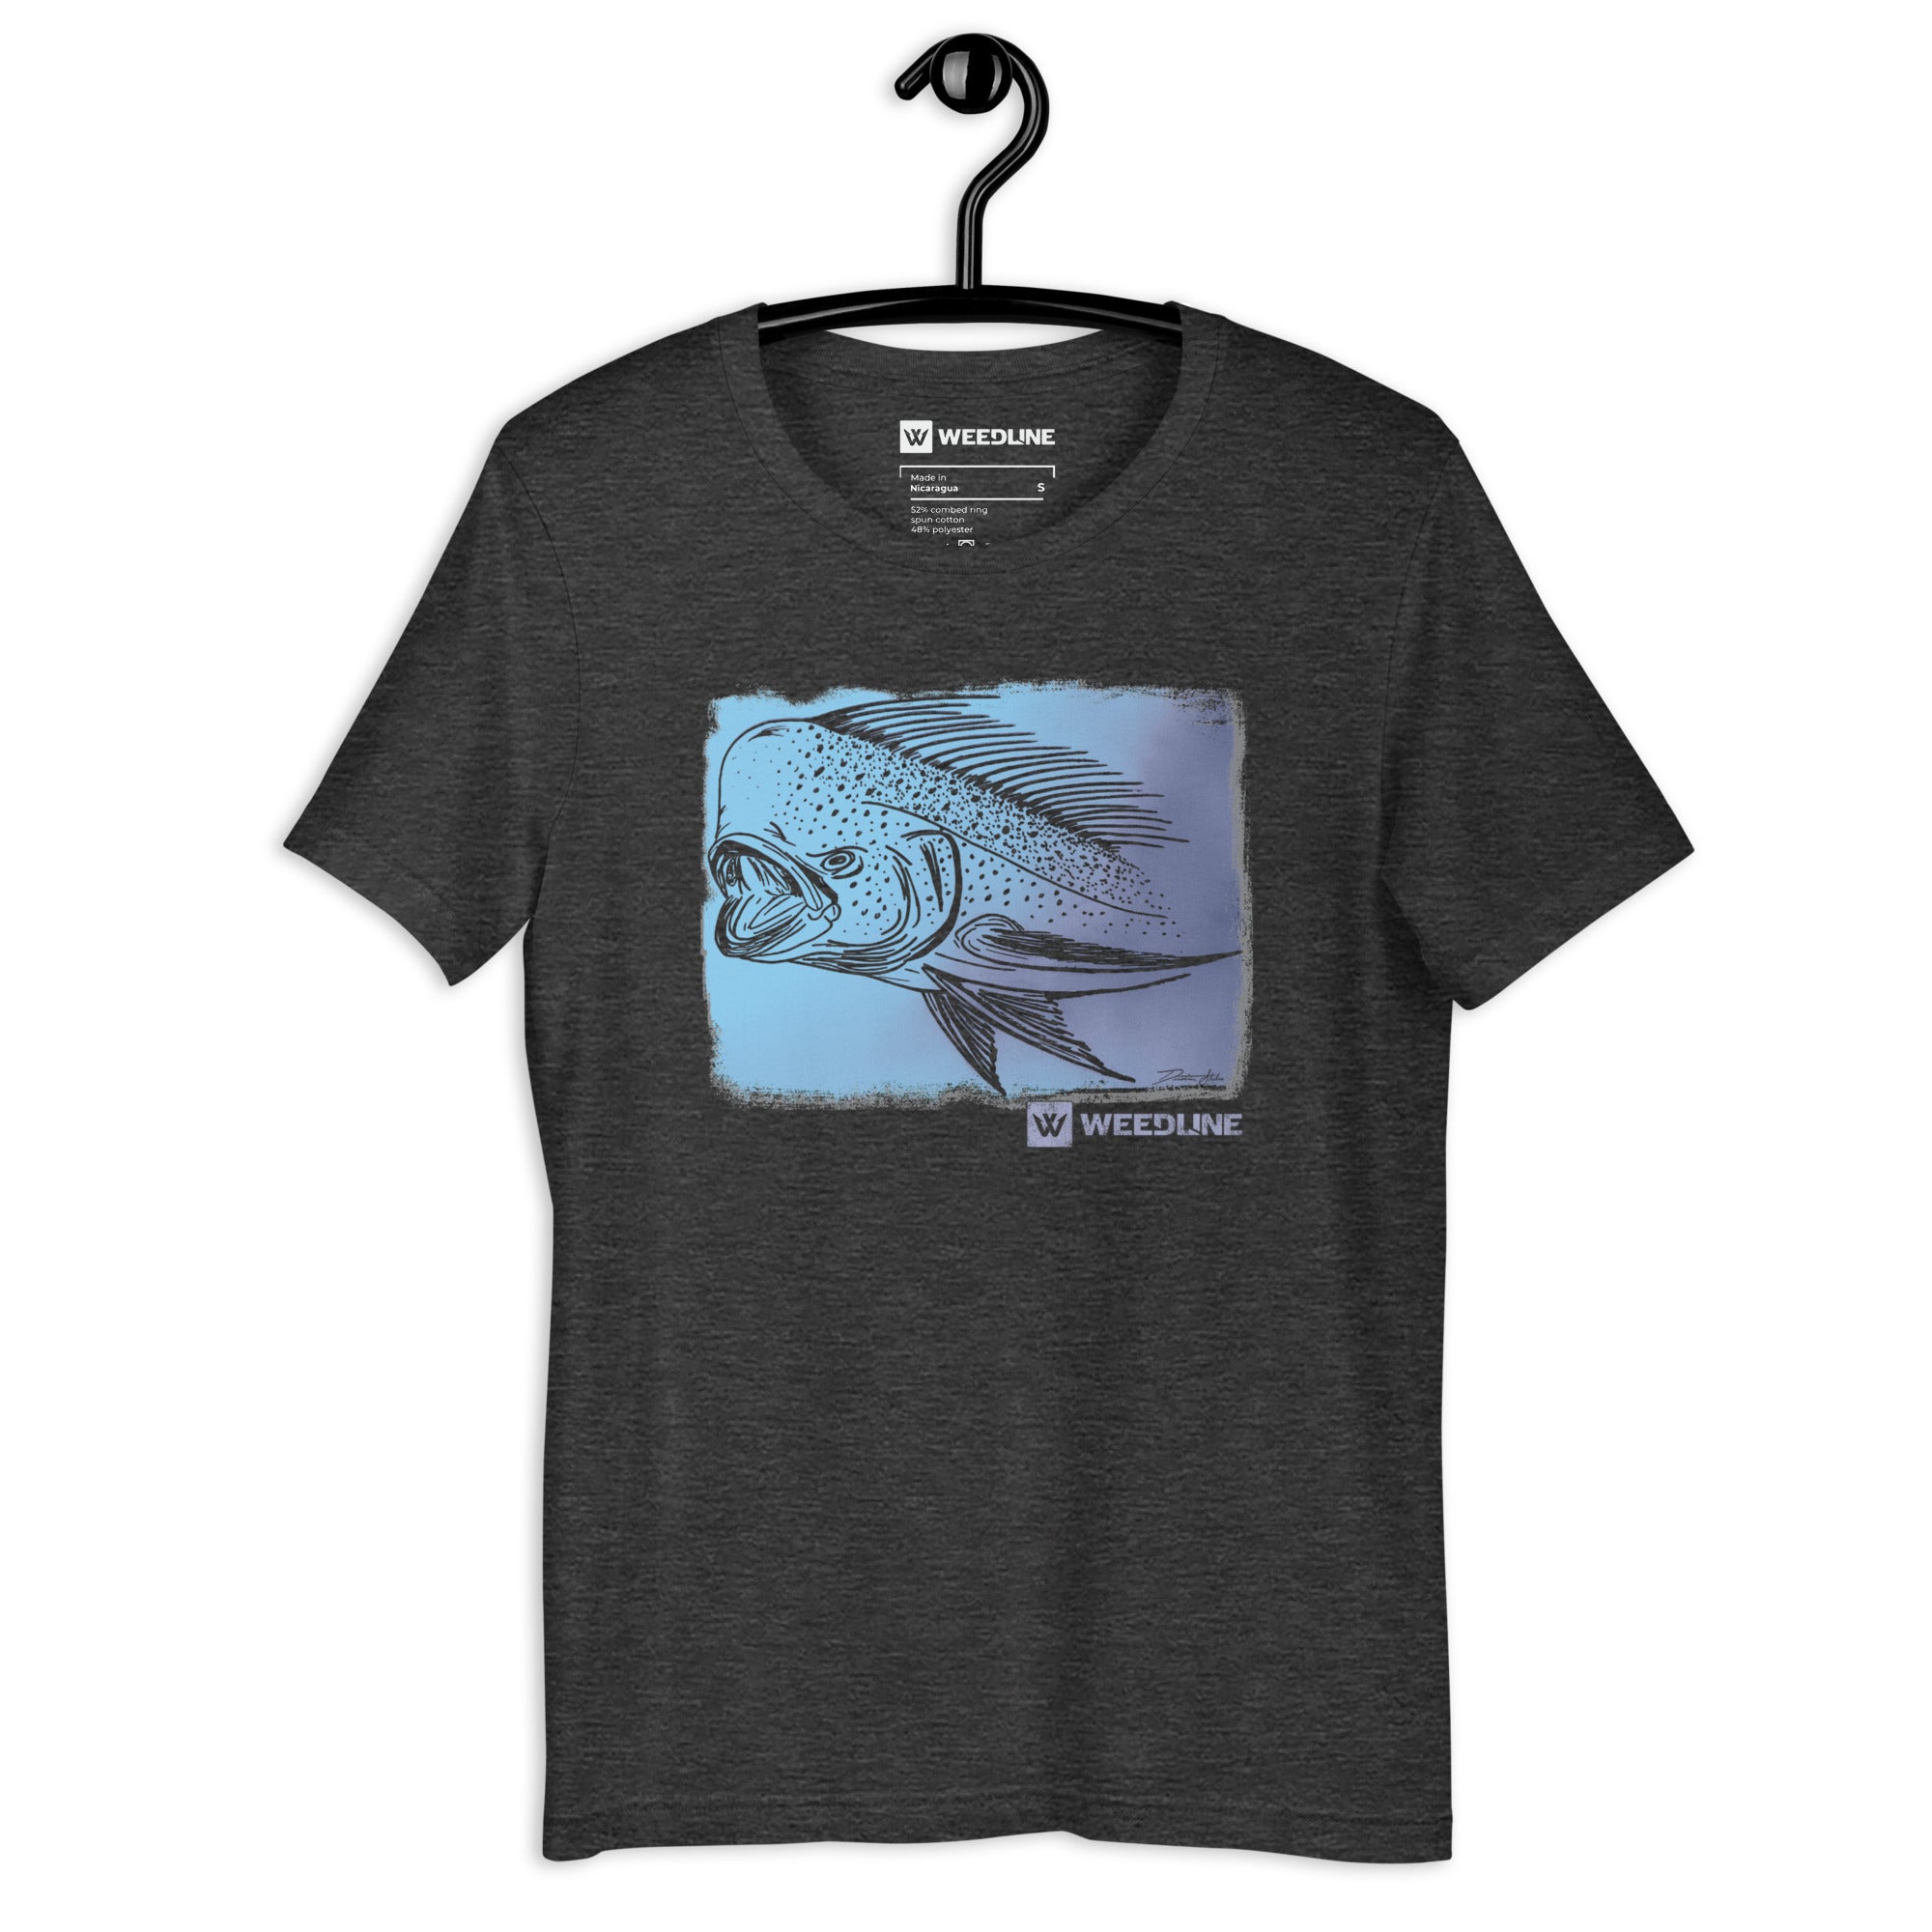 Weedlie Fishing Apparel "Blue Mahi" T-Shirt  Edit alt text